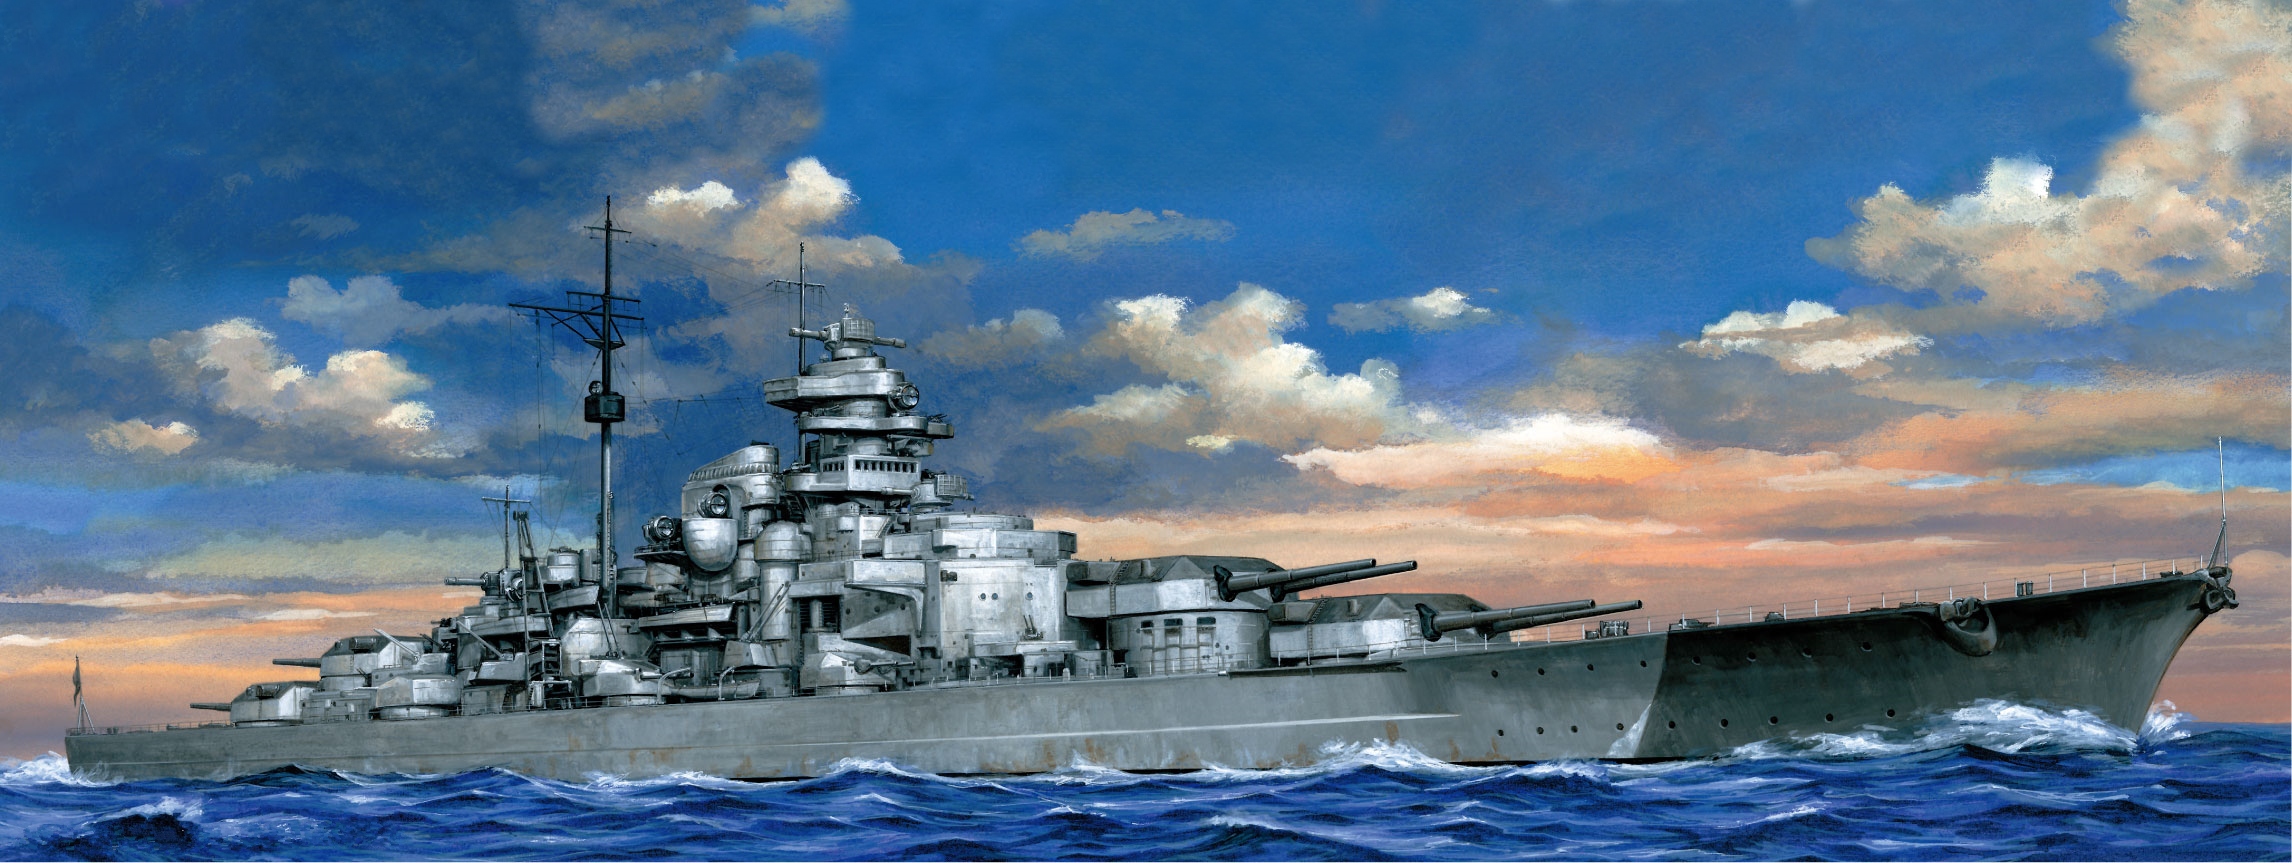 Warship Sea Sky Digital Art Military 2292x863